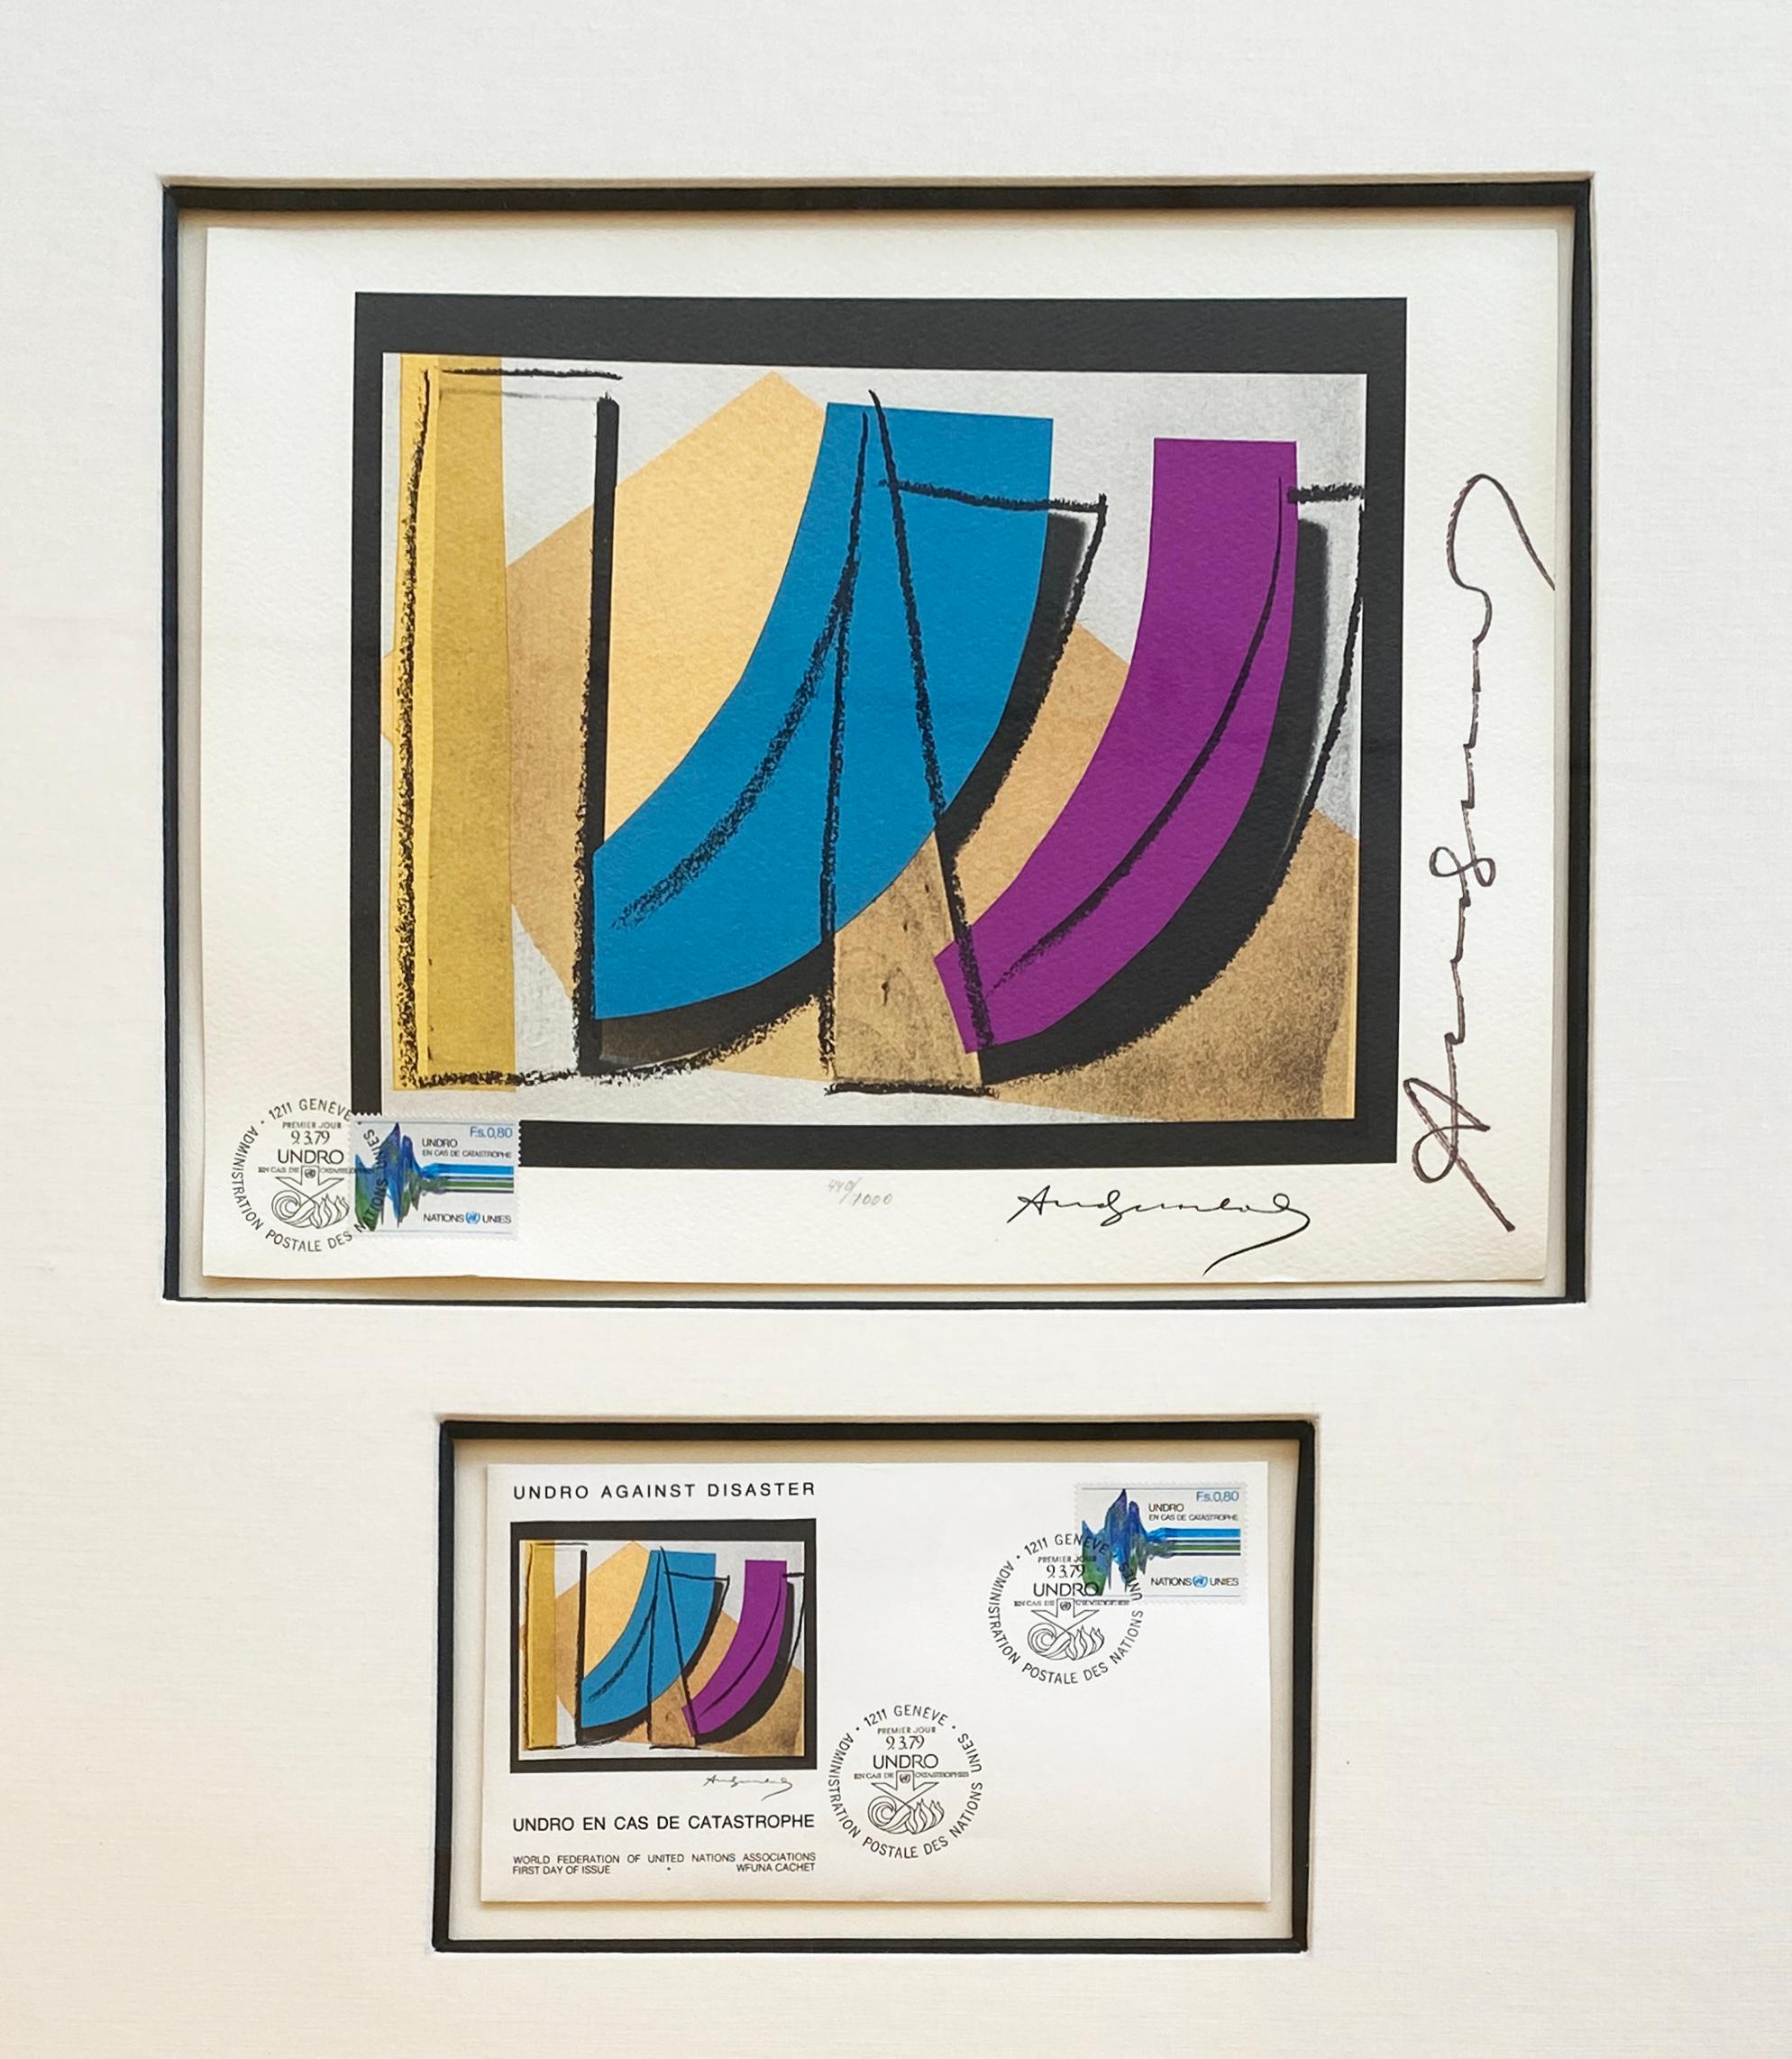 U.N. Stempel, II.185 – Print von Andy Warhol